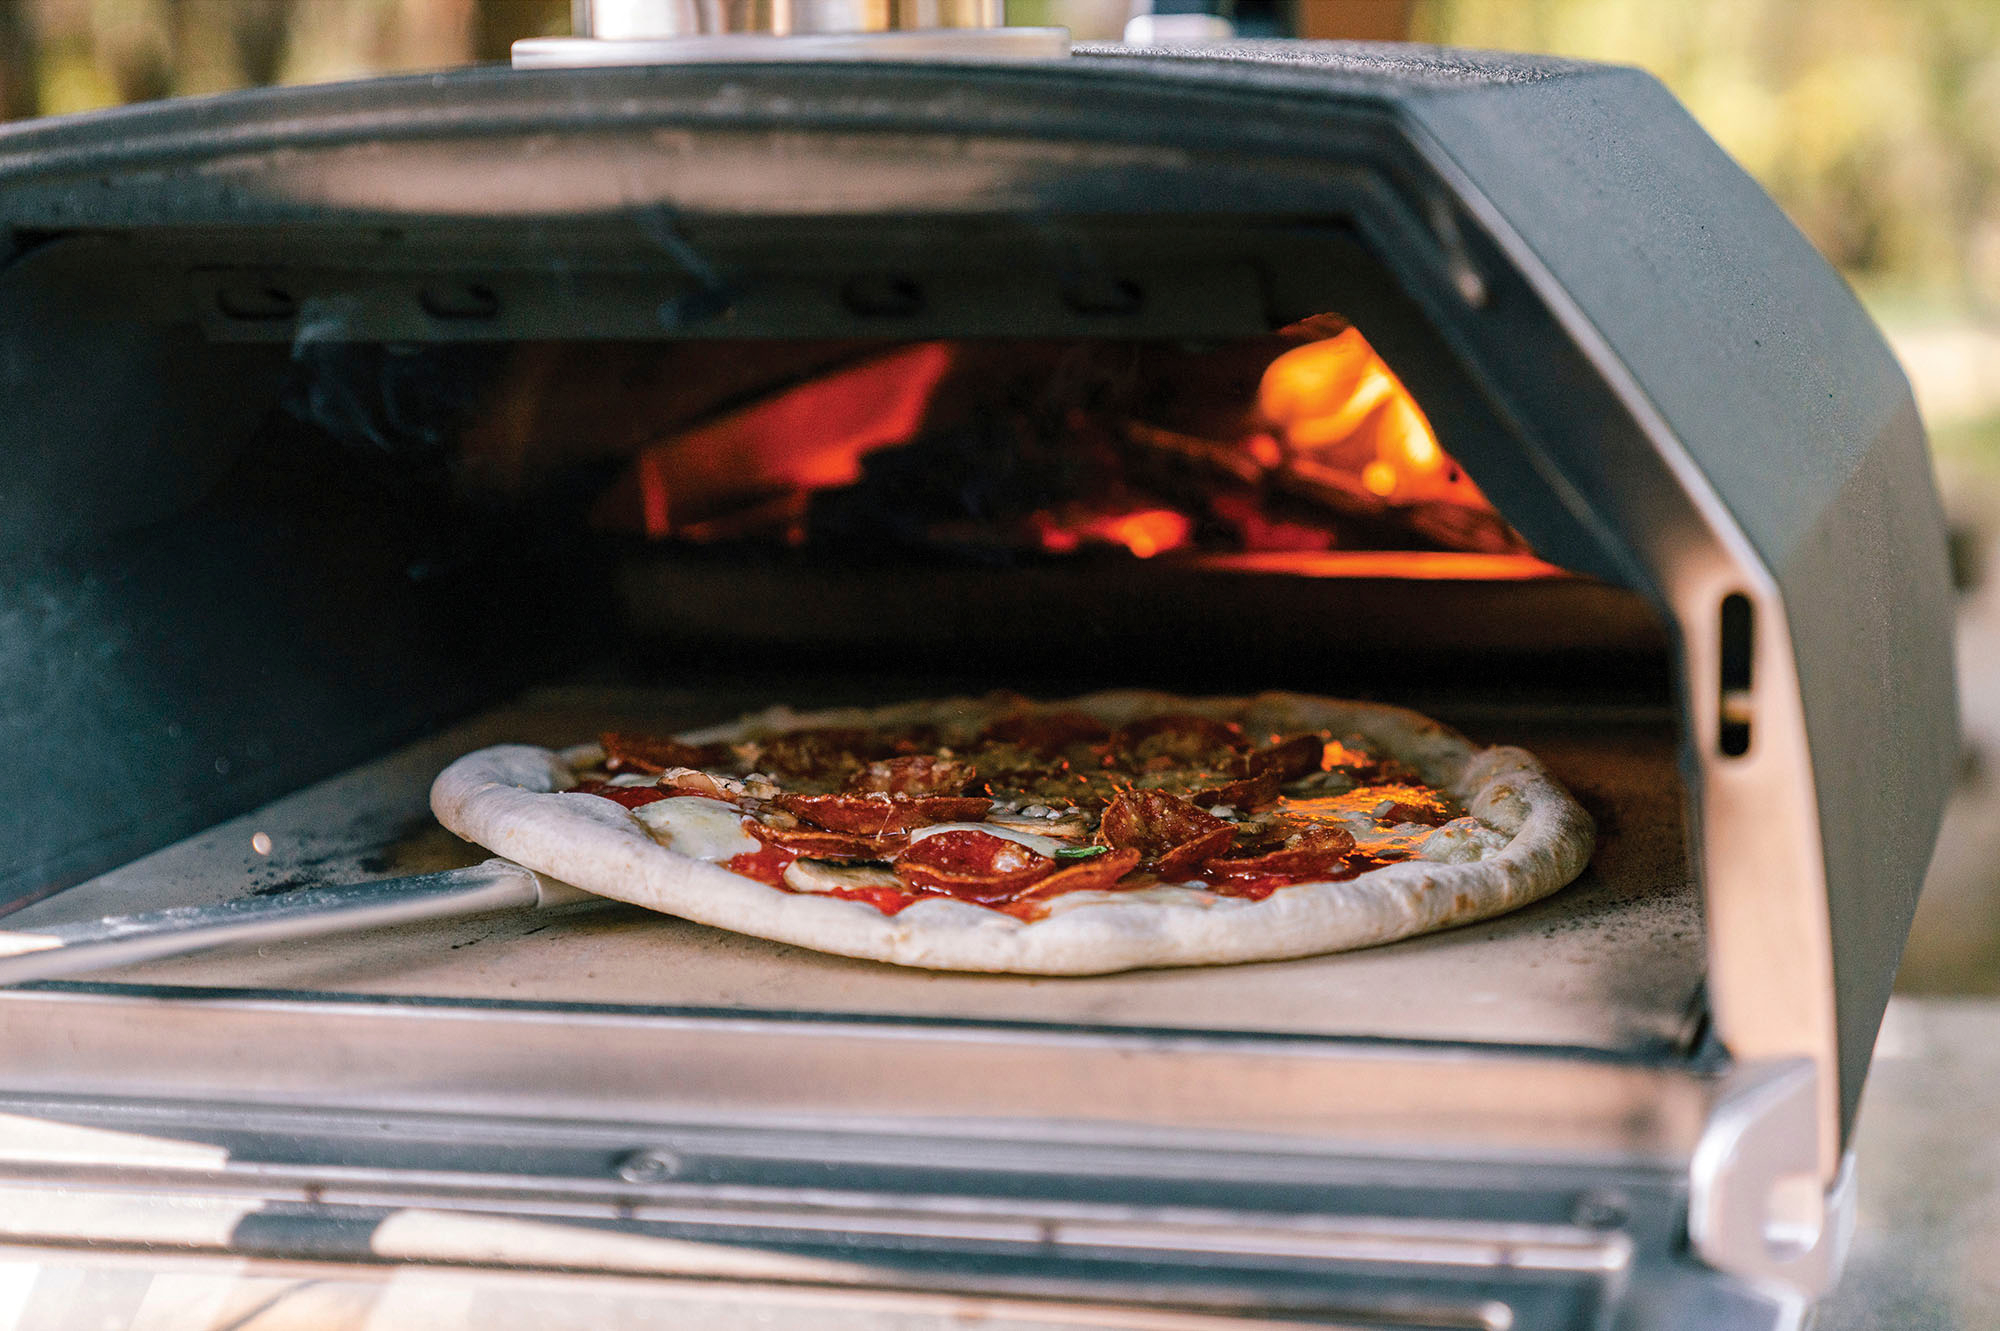 Ooni Karu 16 Multi-Fuel Pizza Oven — Las Cosas Kitchen Shoppe